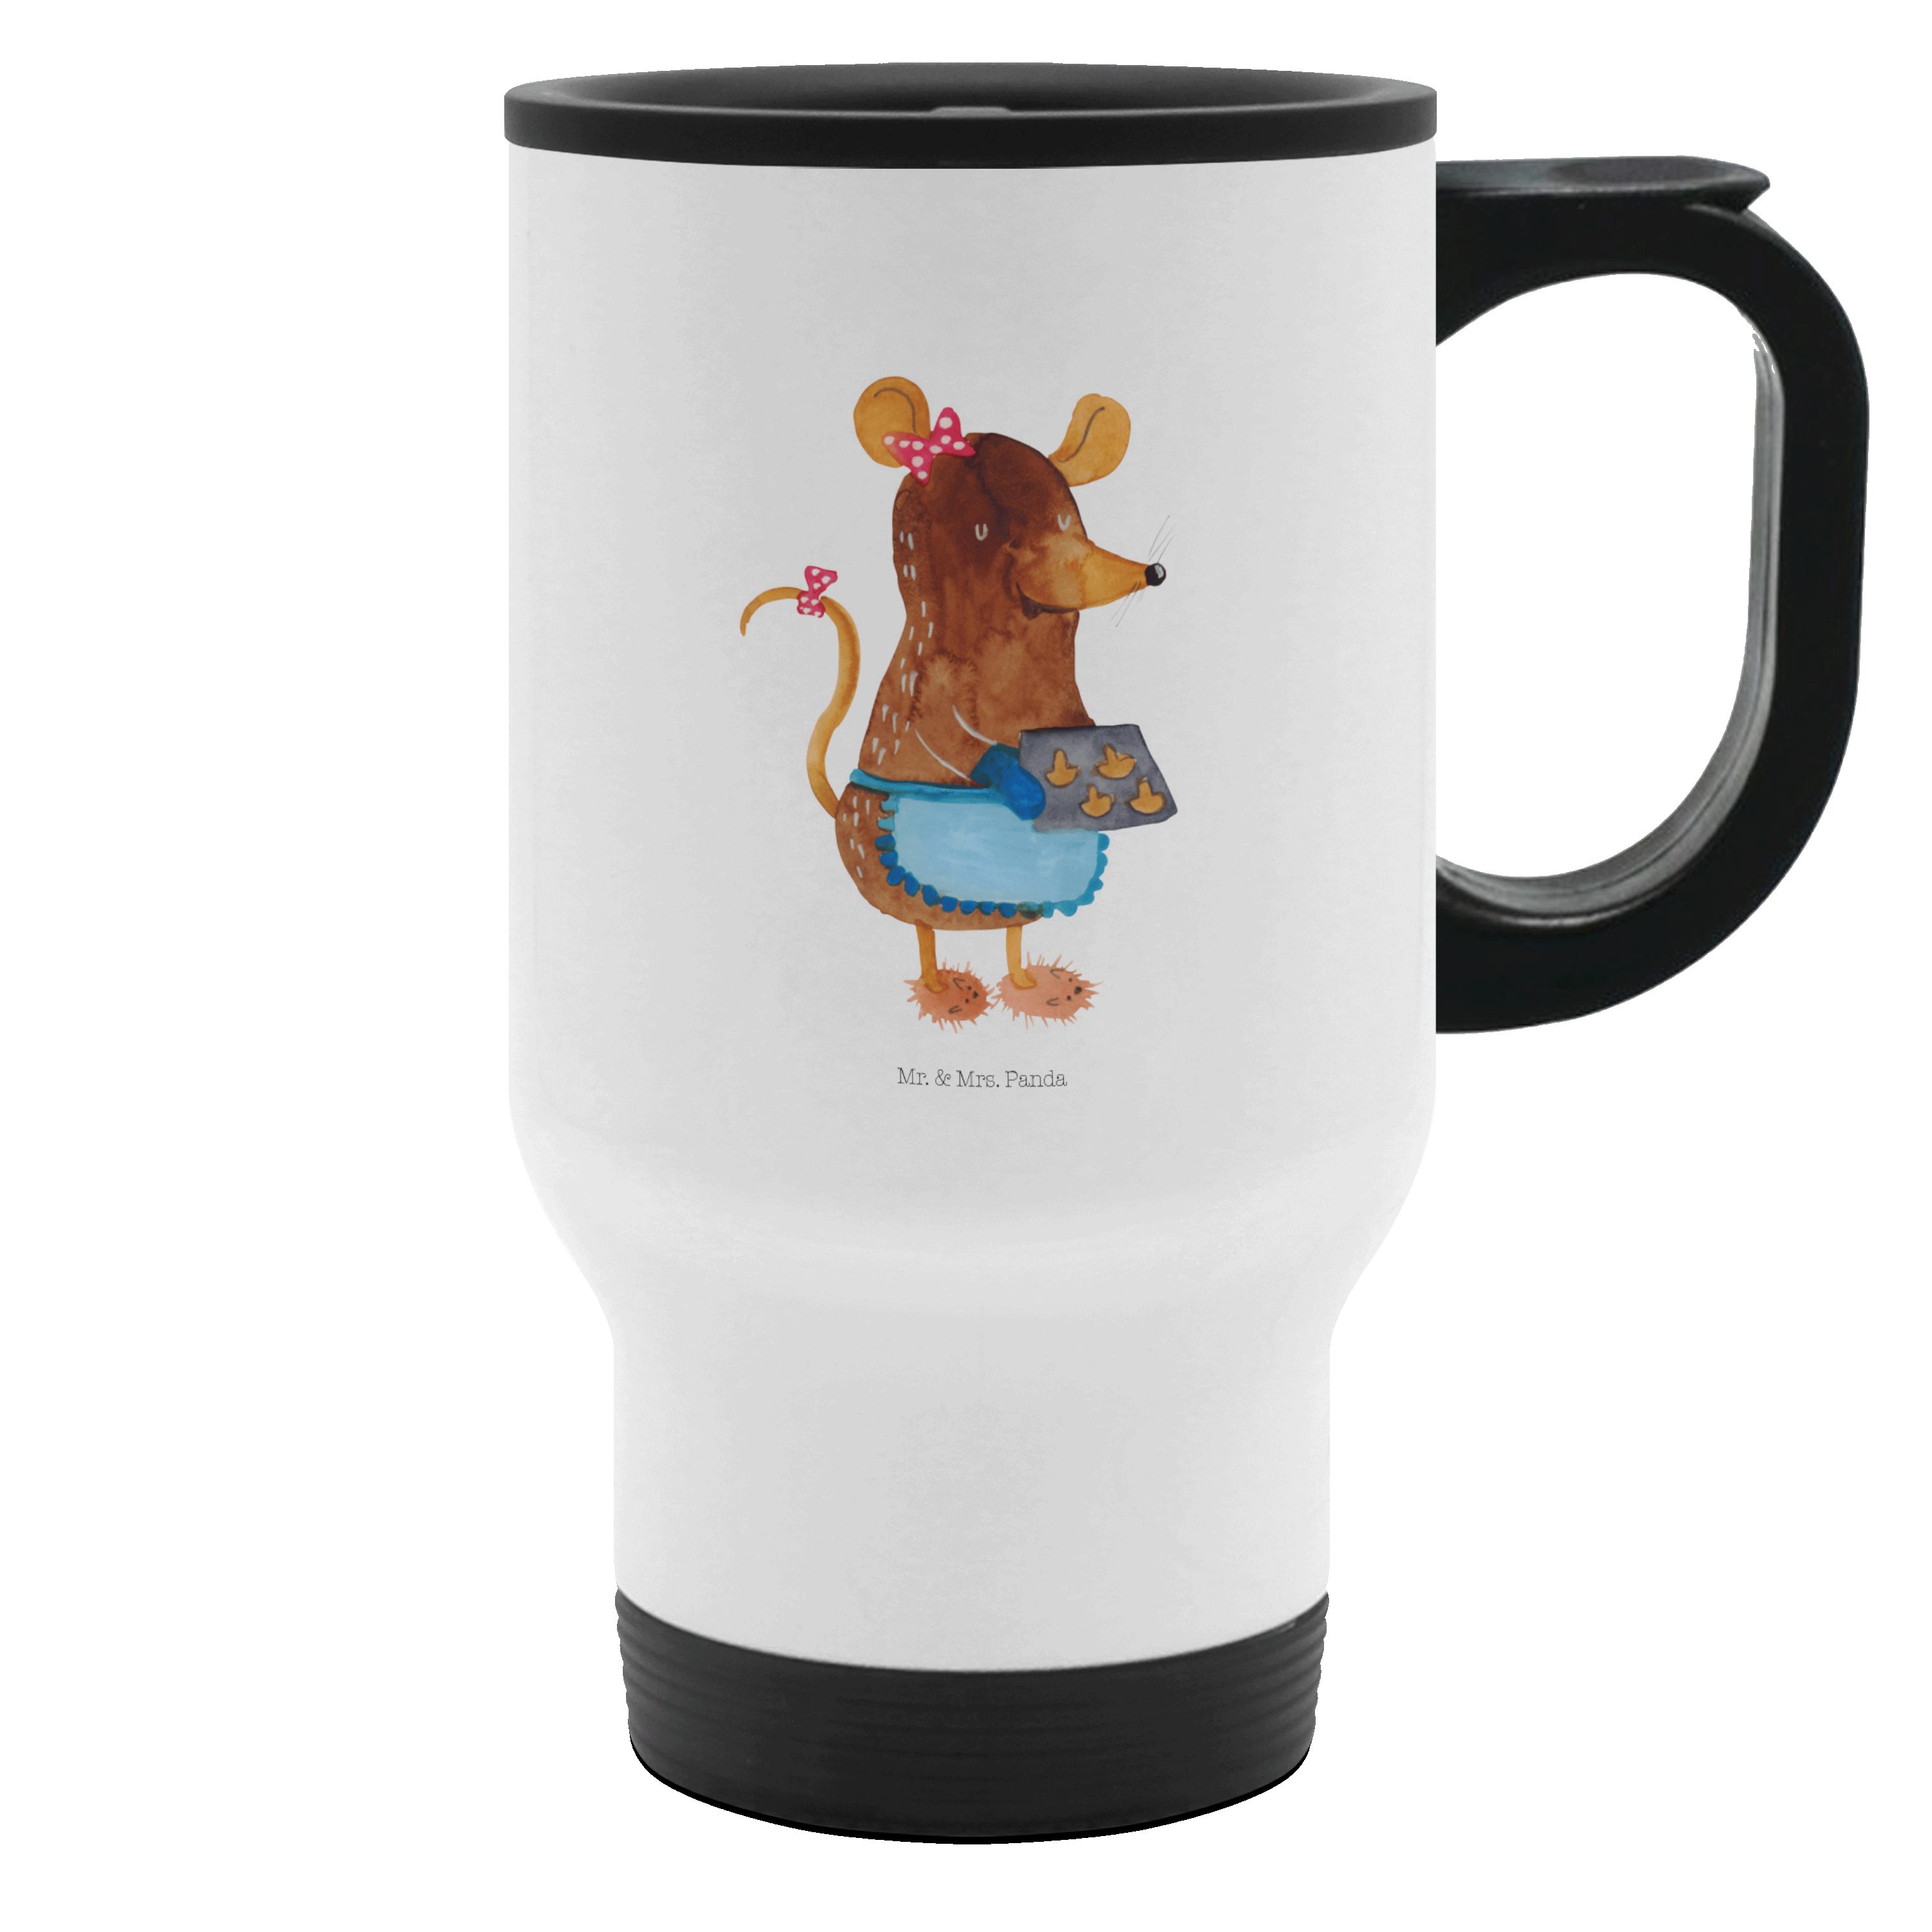 Mr. & Mrs. Panda Thermobecher Maus Kekse - Weiß - Geschenk, Chaosqueen,  Tasse zum Mitnehmen, Kaffee, Edelstahl, Farbecht